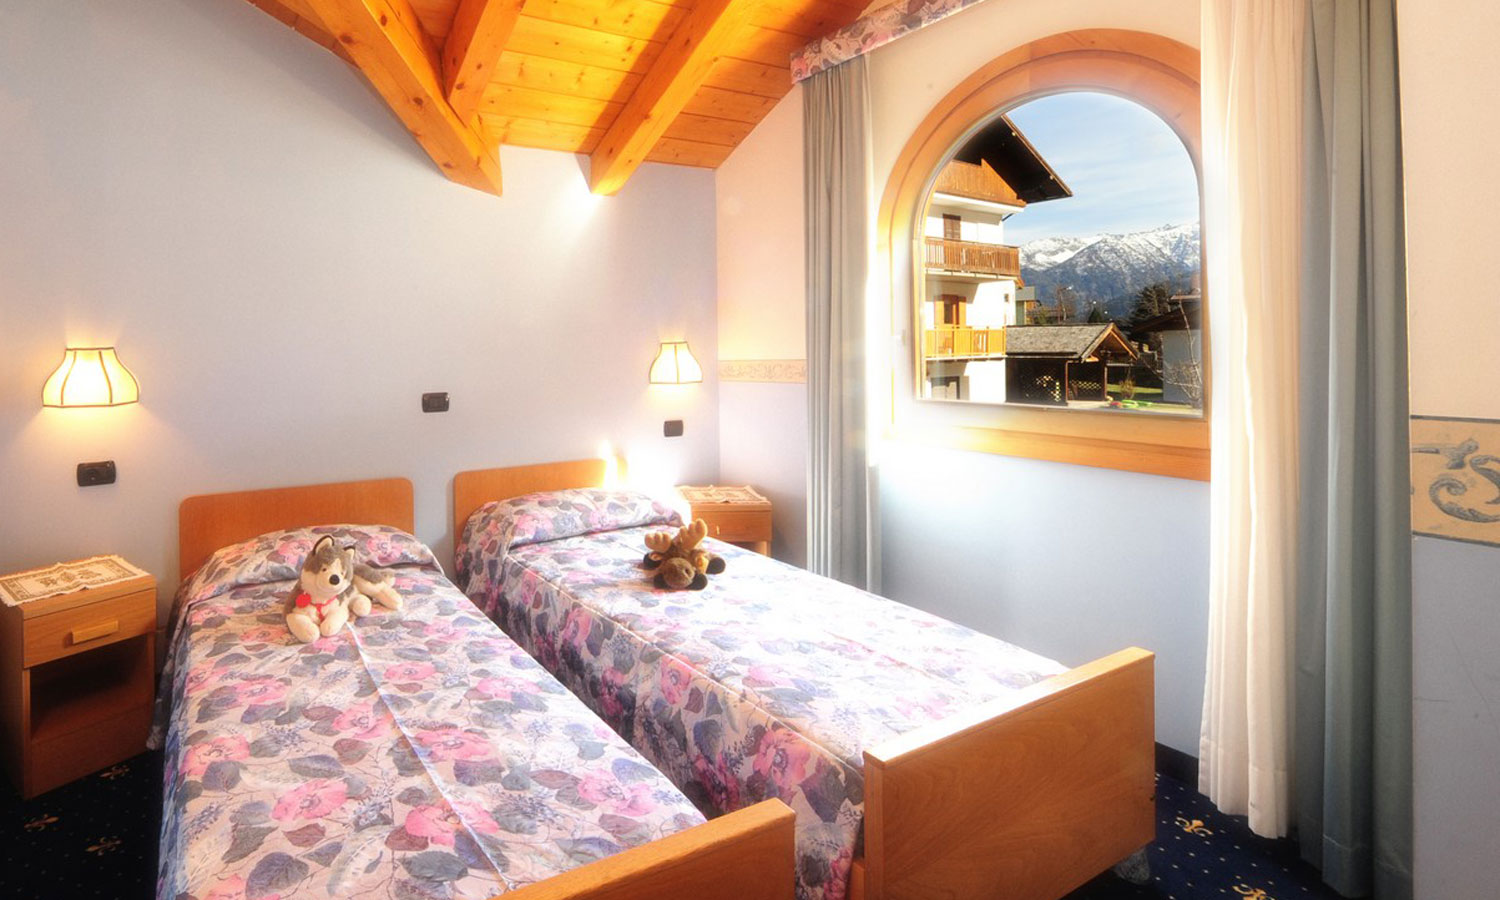 Active Hotel Gran Zebrù - Family Rooms in Val di Sole - Trentino